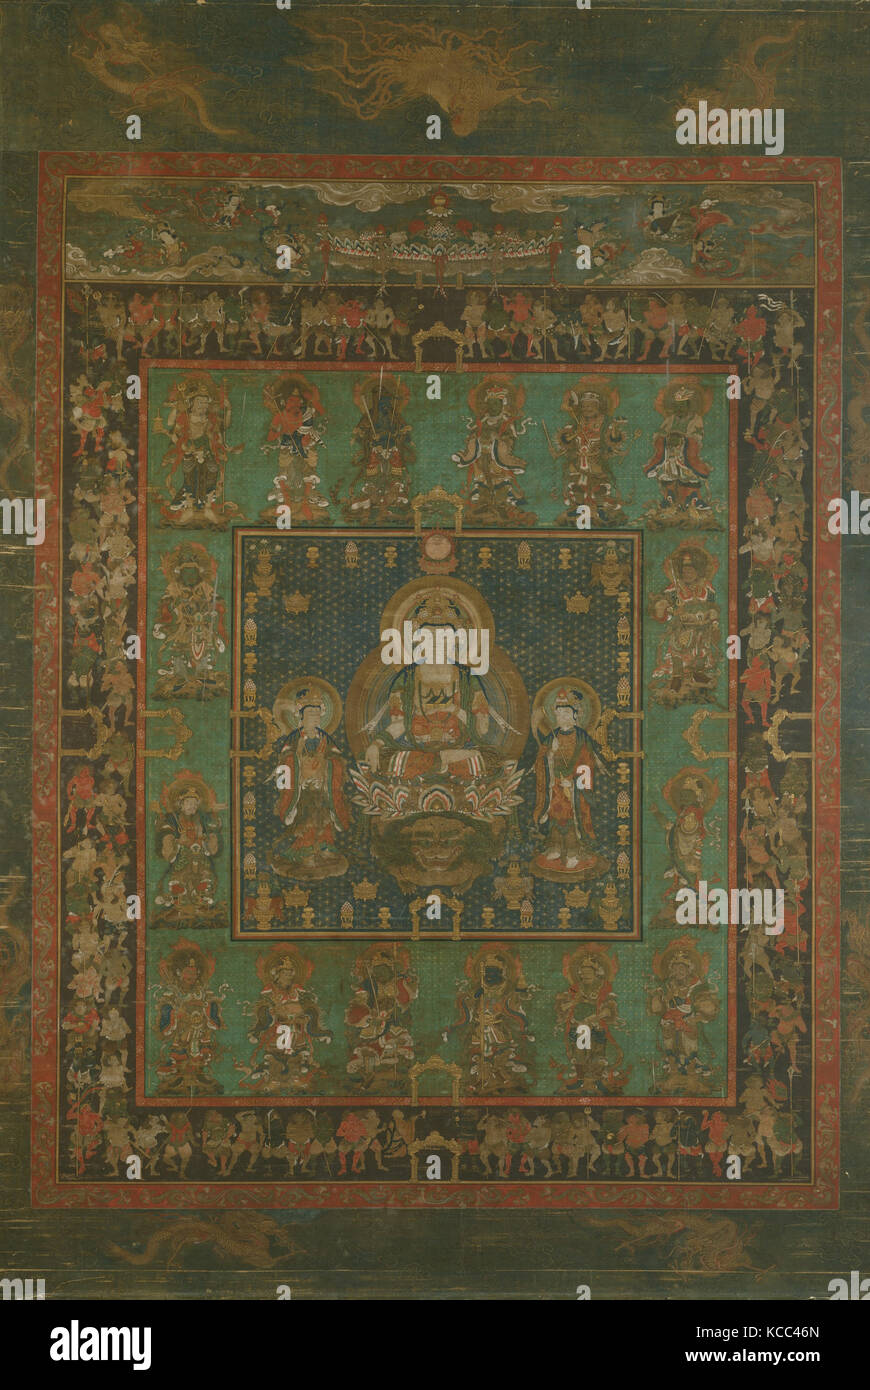 般若菩薩曼荼羅図, Mandala de Hannya, Bosatsu Nanbokuchō période (1336-1992), 14e siècle, le Japon, la pendaison, la couleur d'encre, défilement, l'or Banque D'Images